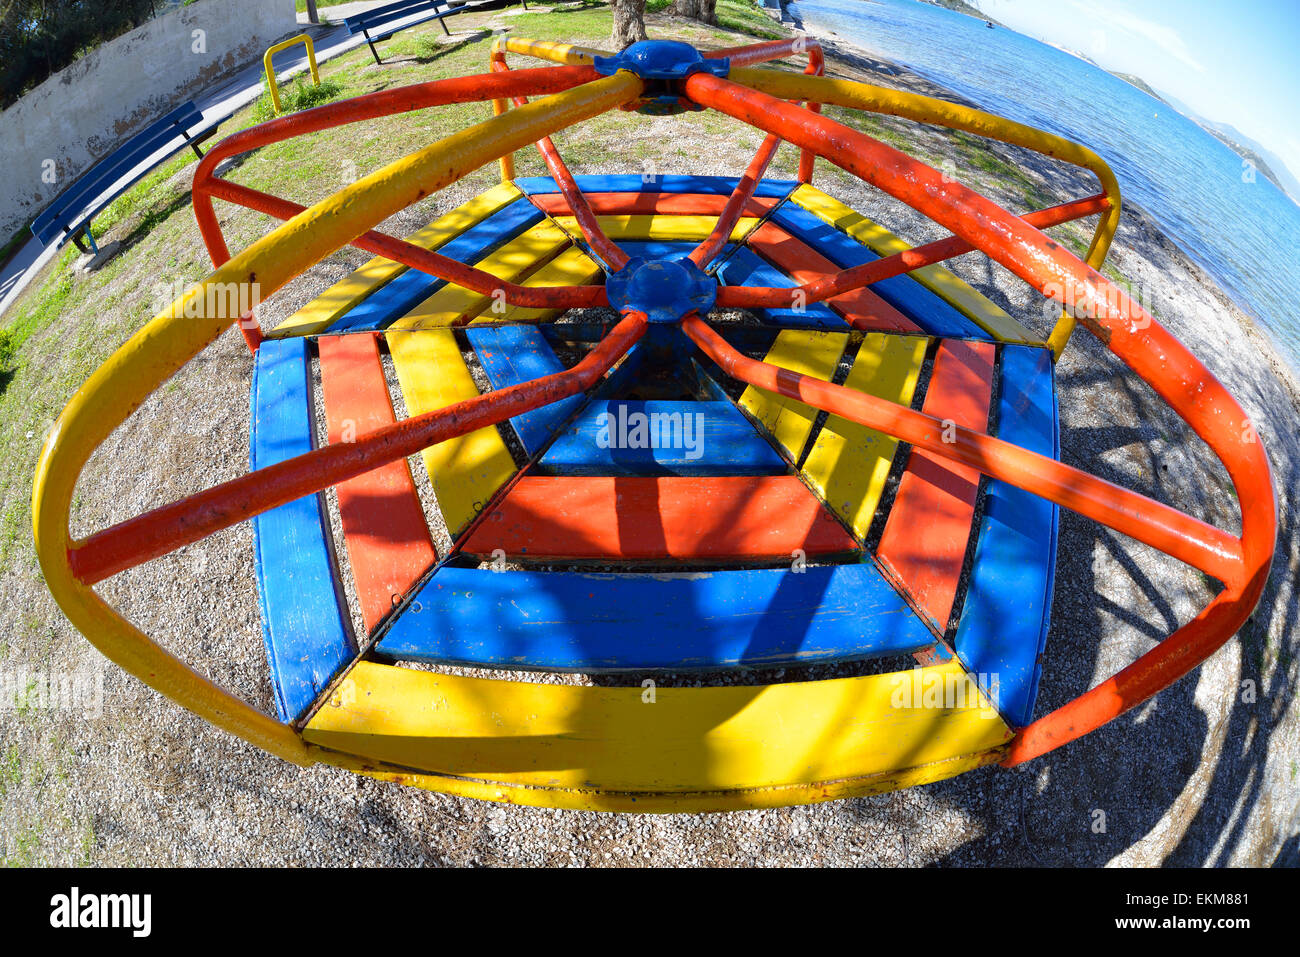 Merry-go-round in children playground Stock Photo